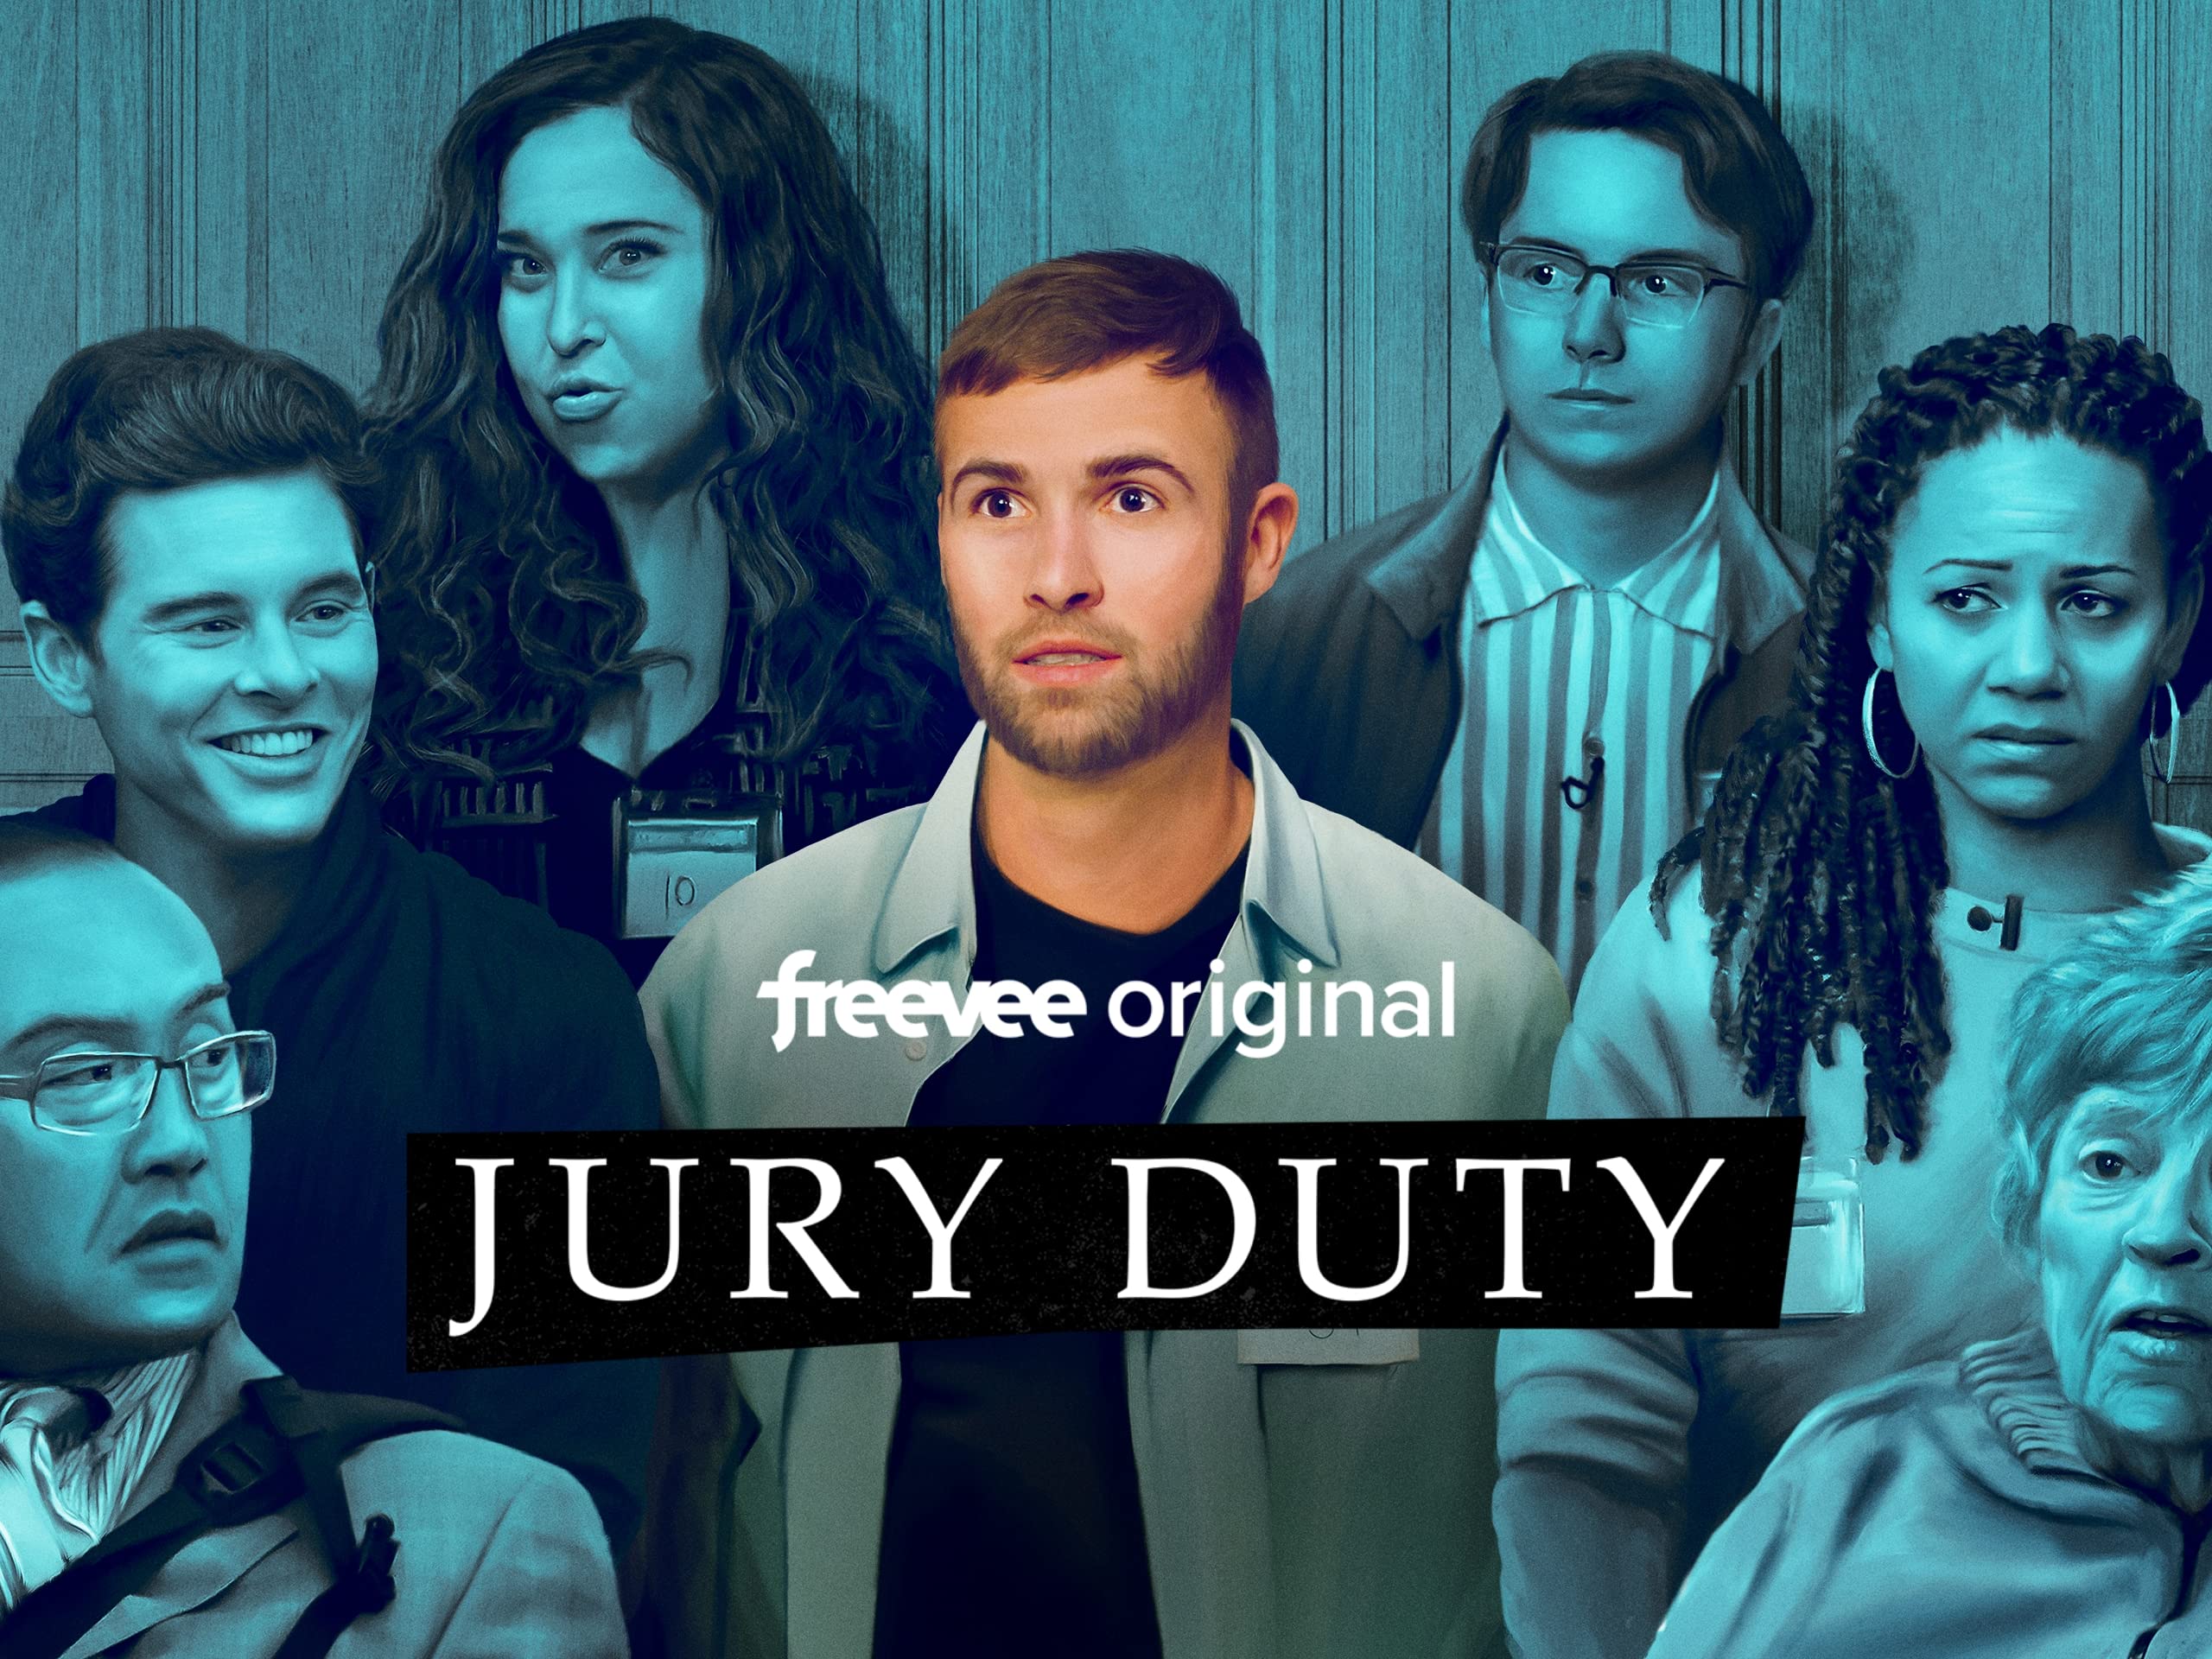 Mua Jury Duty Season 1 trên Amazon Mỹ chính hãng 2023 Fado